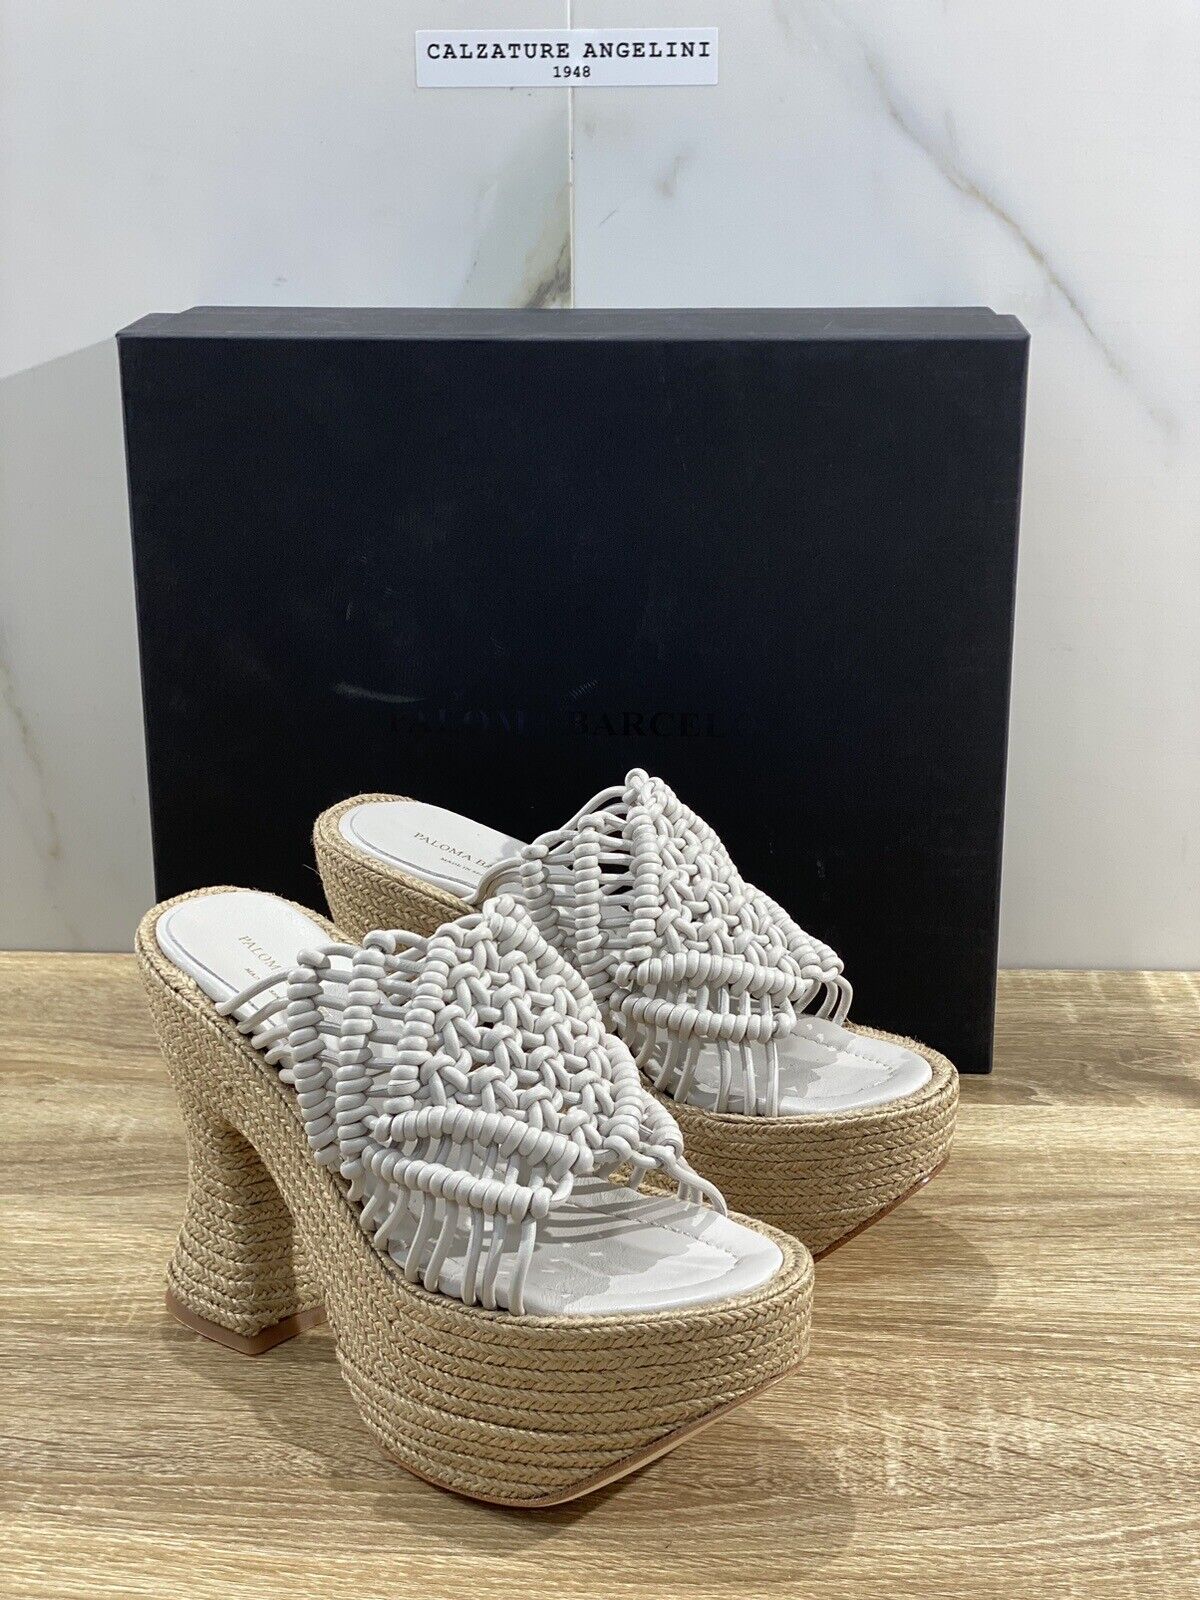 Paloma BARCELO’ Sandalo Donna Salma Pelle White Luxury Shoes 38